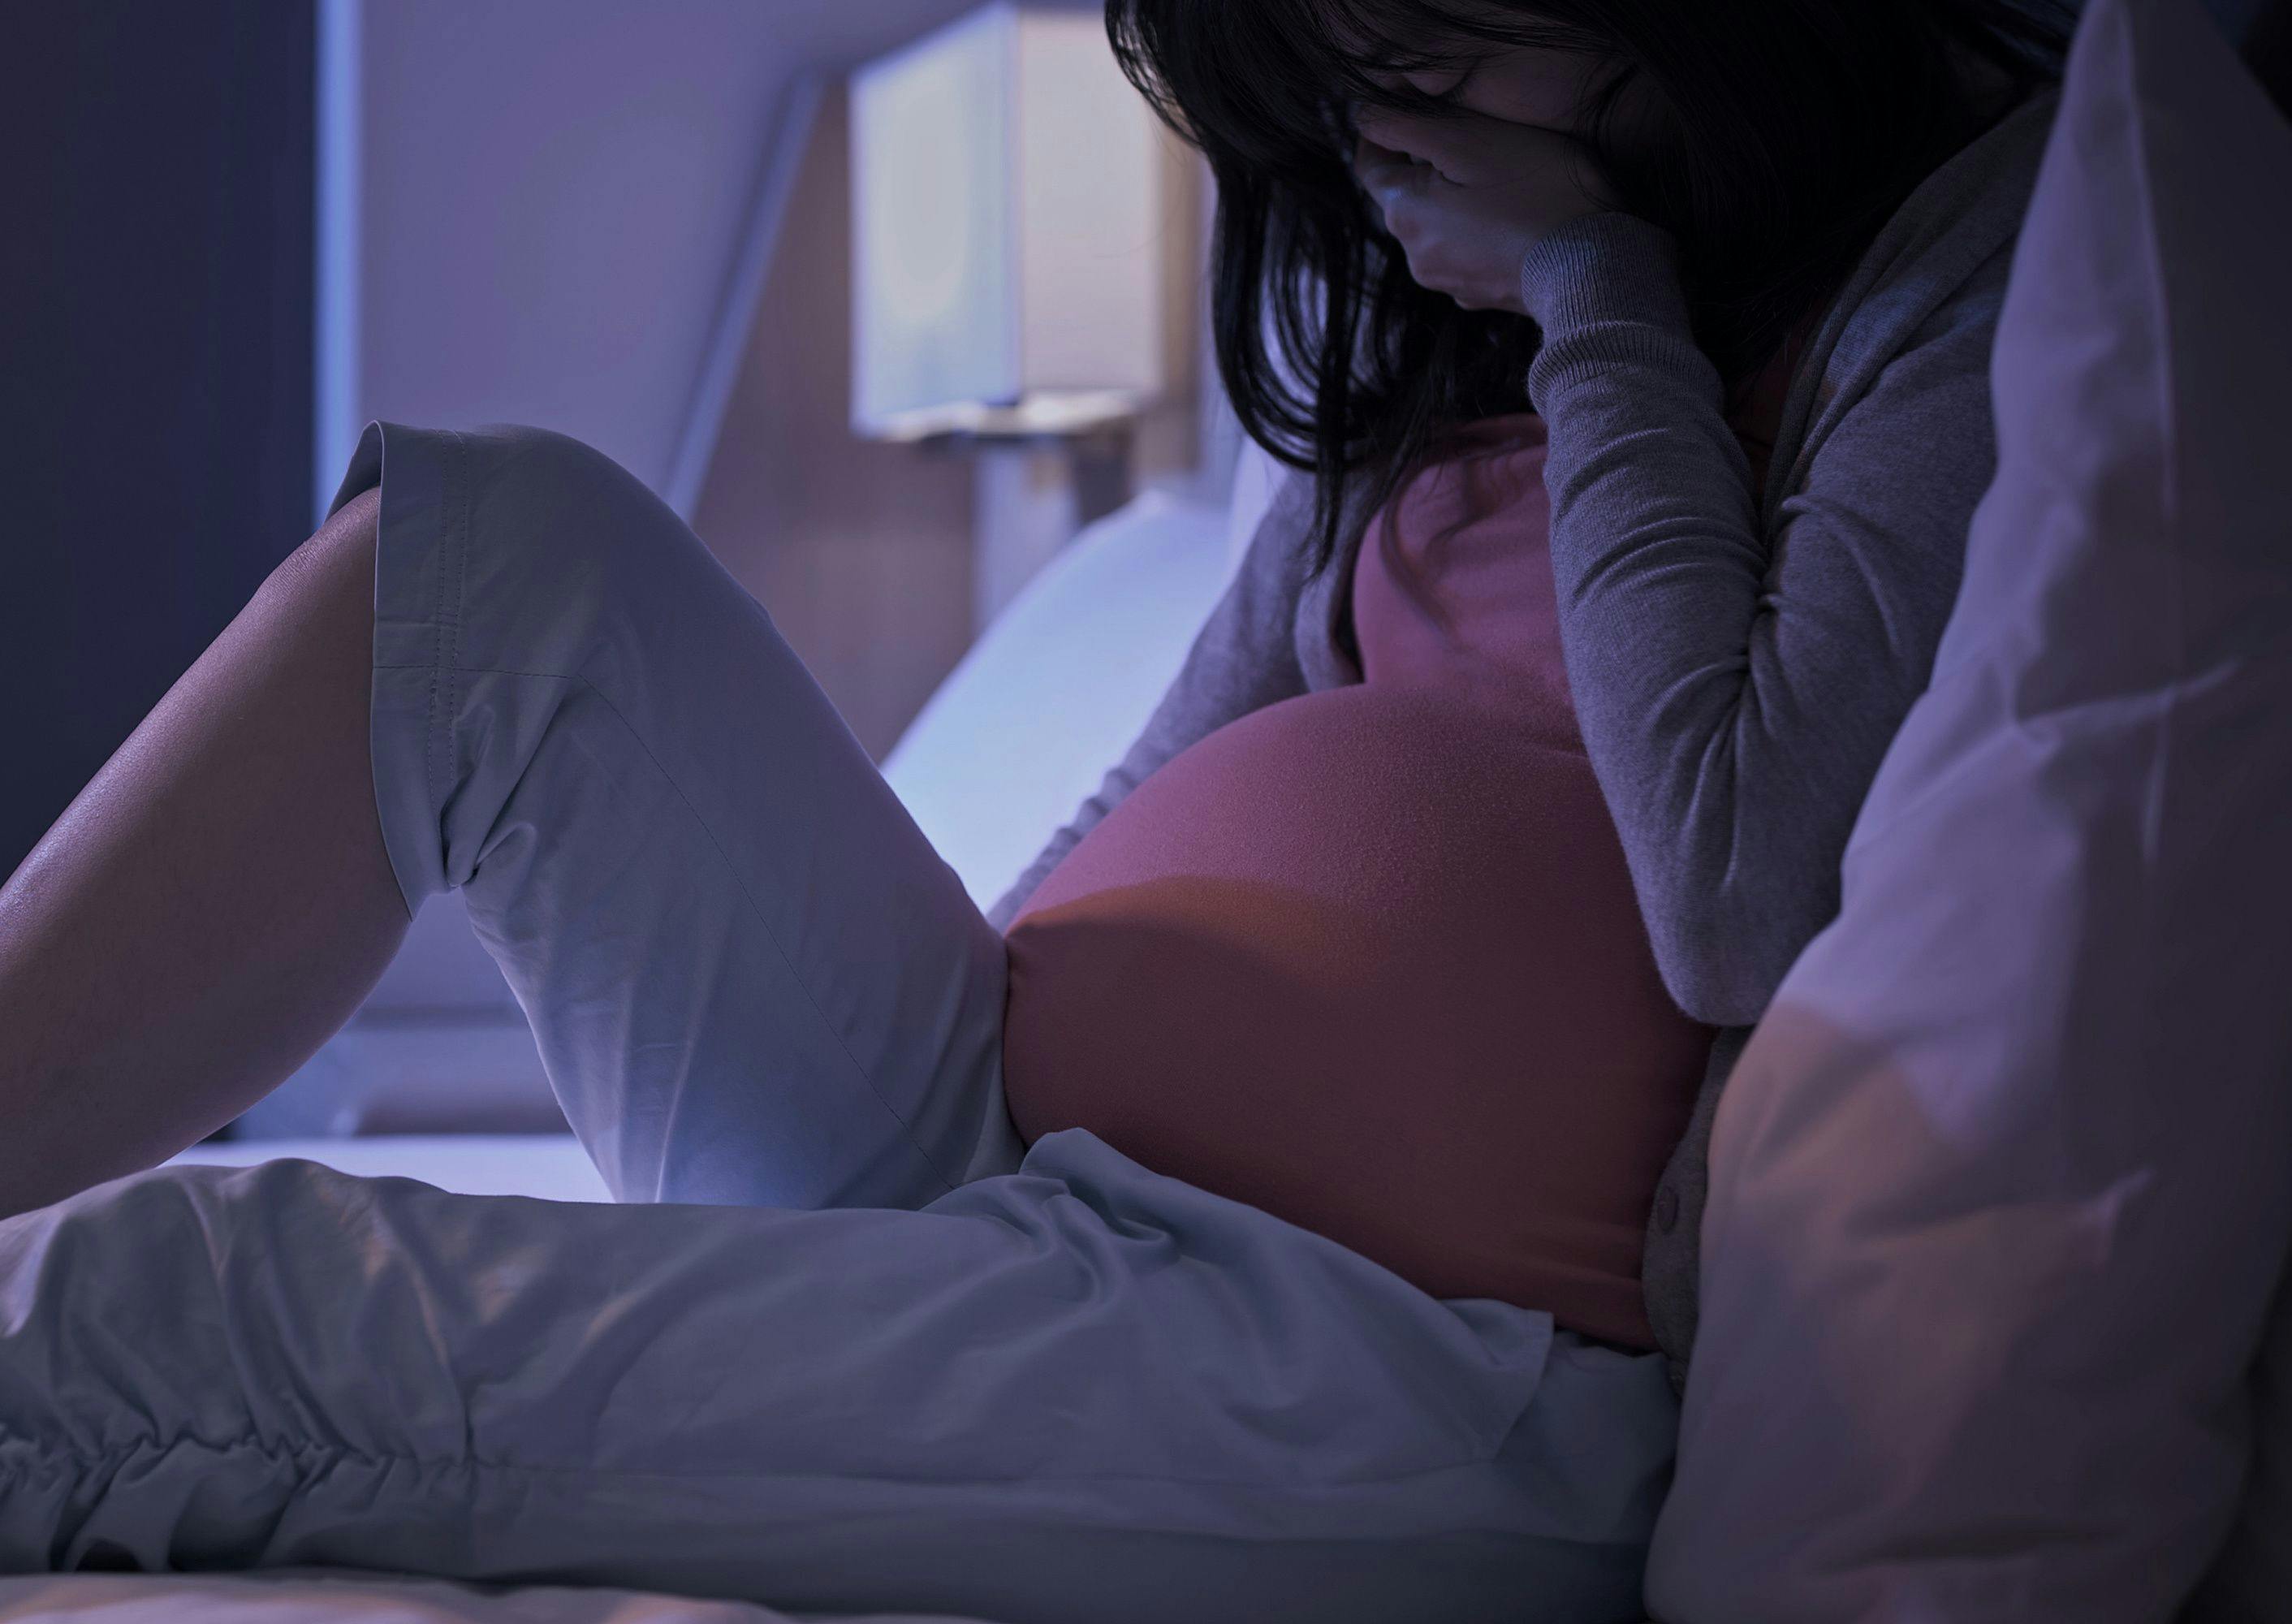 pregnant woman feel depression - ryanking999 - stock.adobe.com